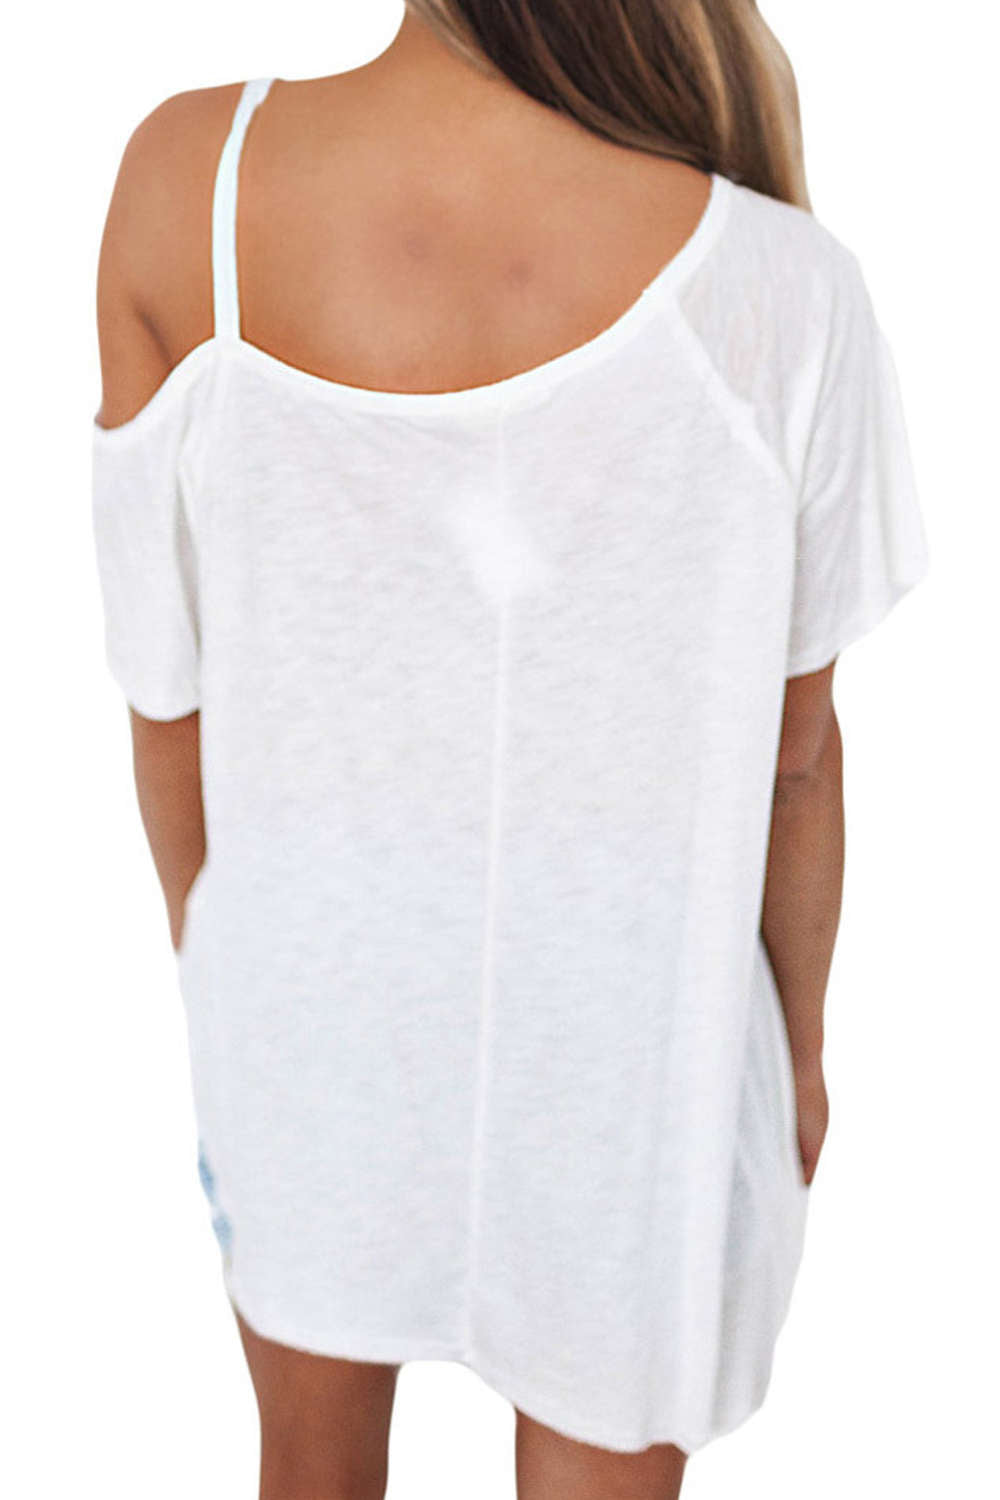 Iyasson Women Sexy Short Sleeve Asymmetric Shoulder T-shirt